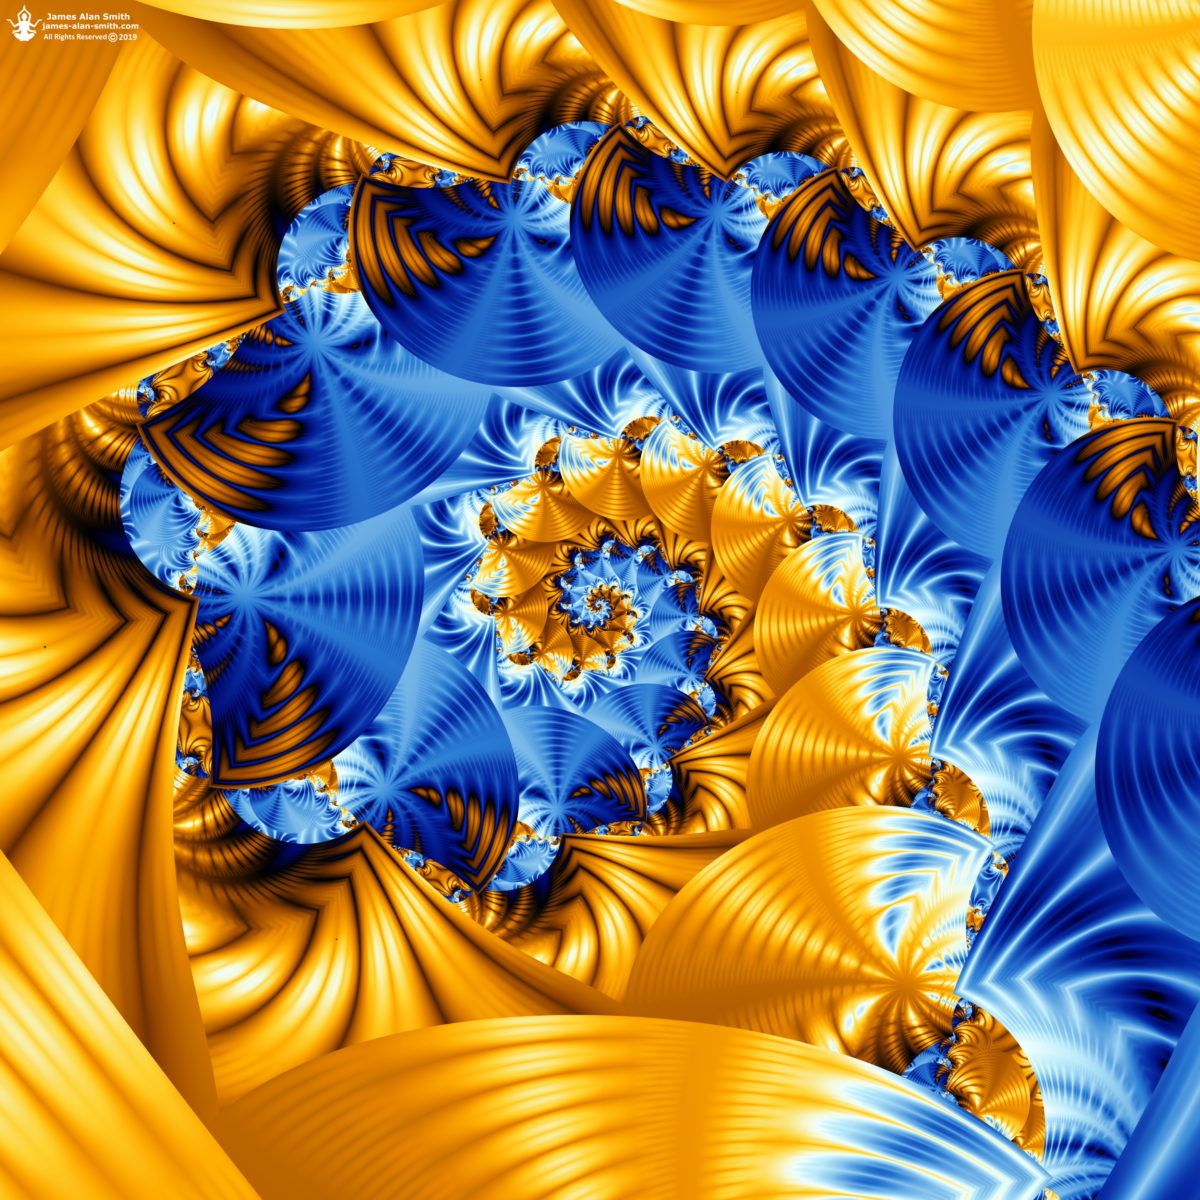 Rotating Swirls: Artwork by James Alan Smith